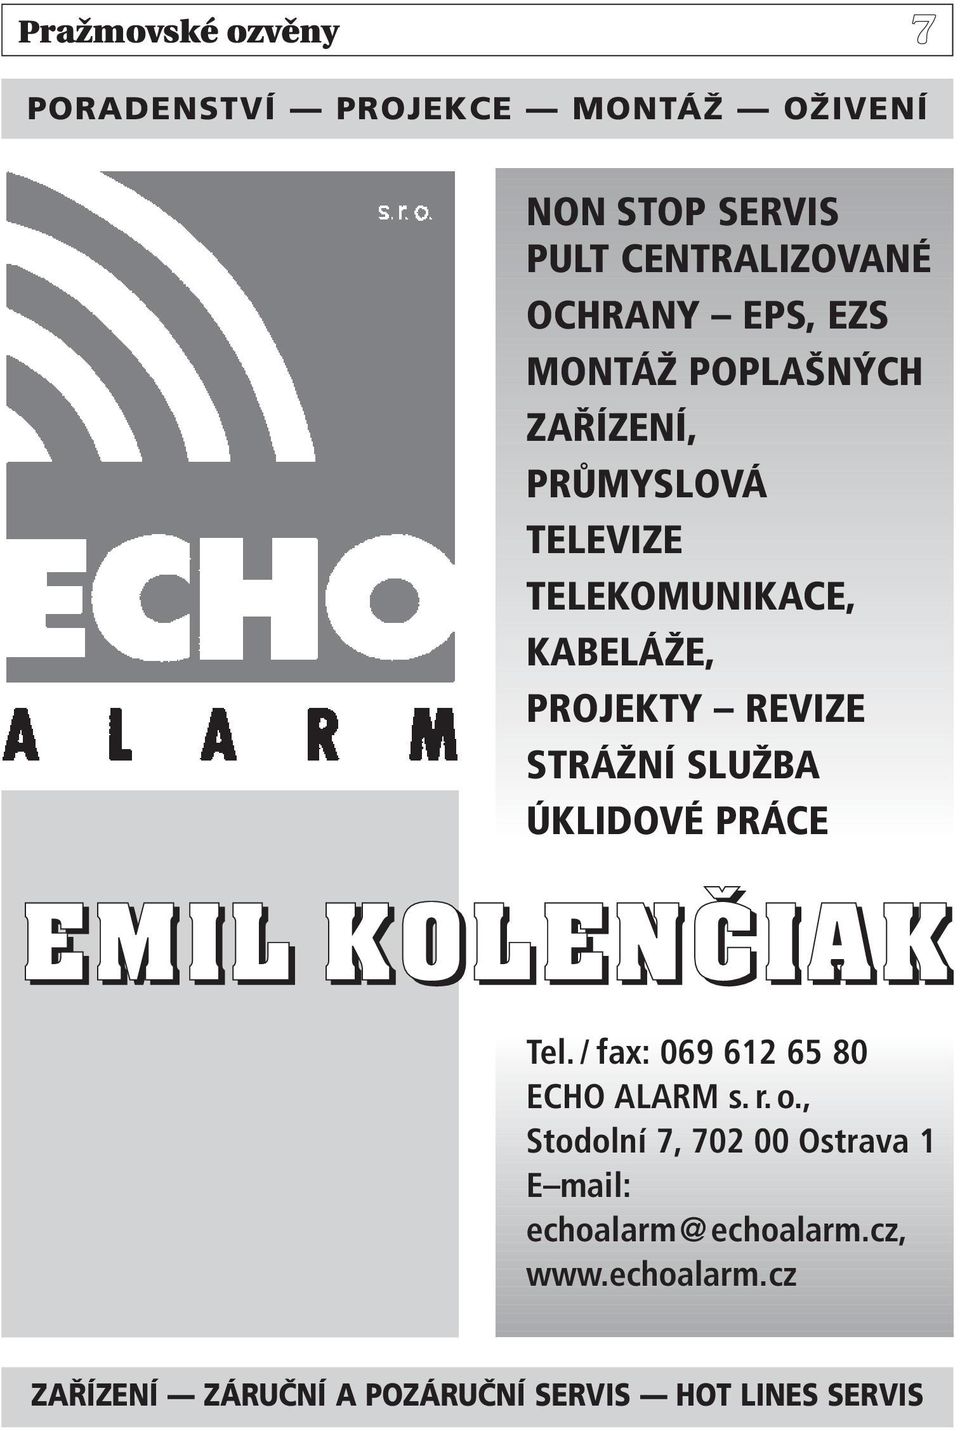 SLUŽBA ÚKLIDOVÉ PRÁCE EMIL KOLENâIAK Tel. / fax: 069 612 65 80 ECHO ALARM s. r. o.